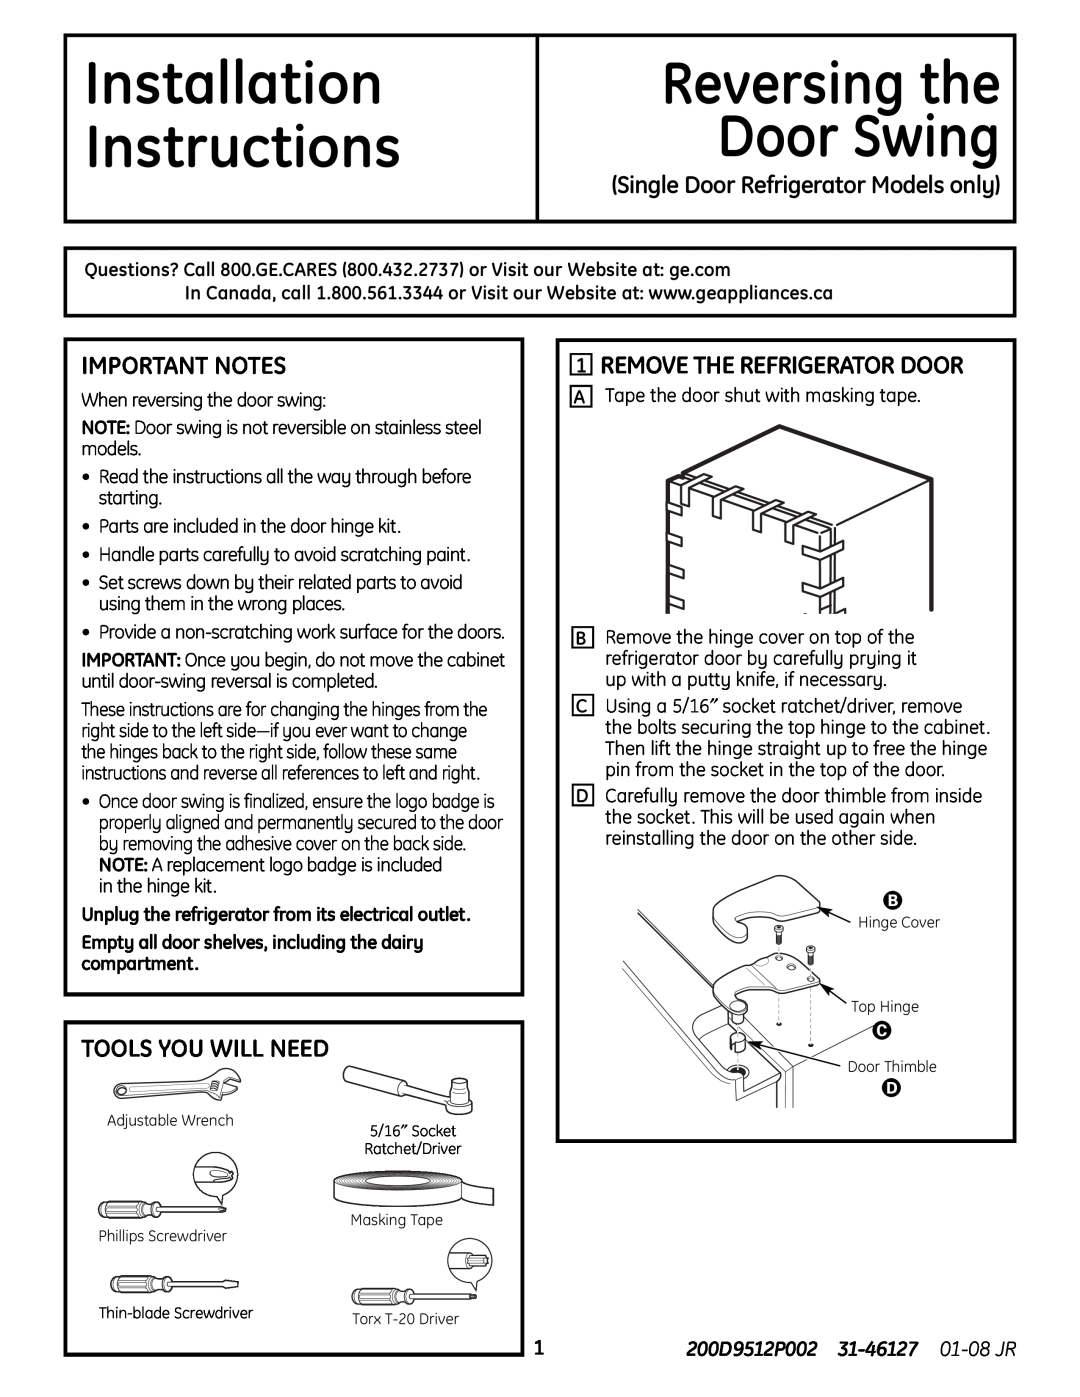 GE Single Door Refrigerator manual Important Notes, Tools You Will Need, 1REMOVE THE REFRIGERATOR DOOR 